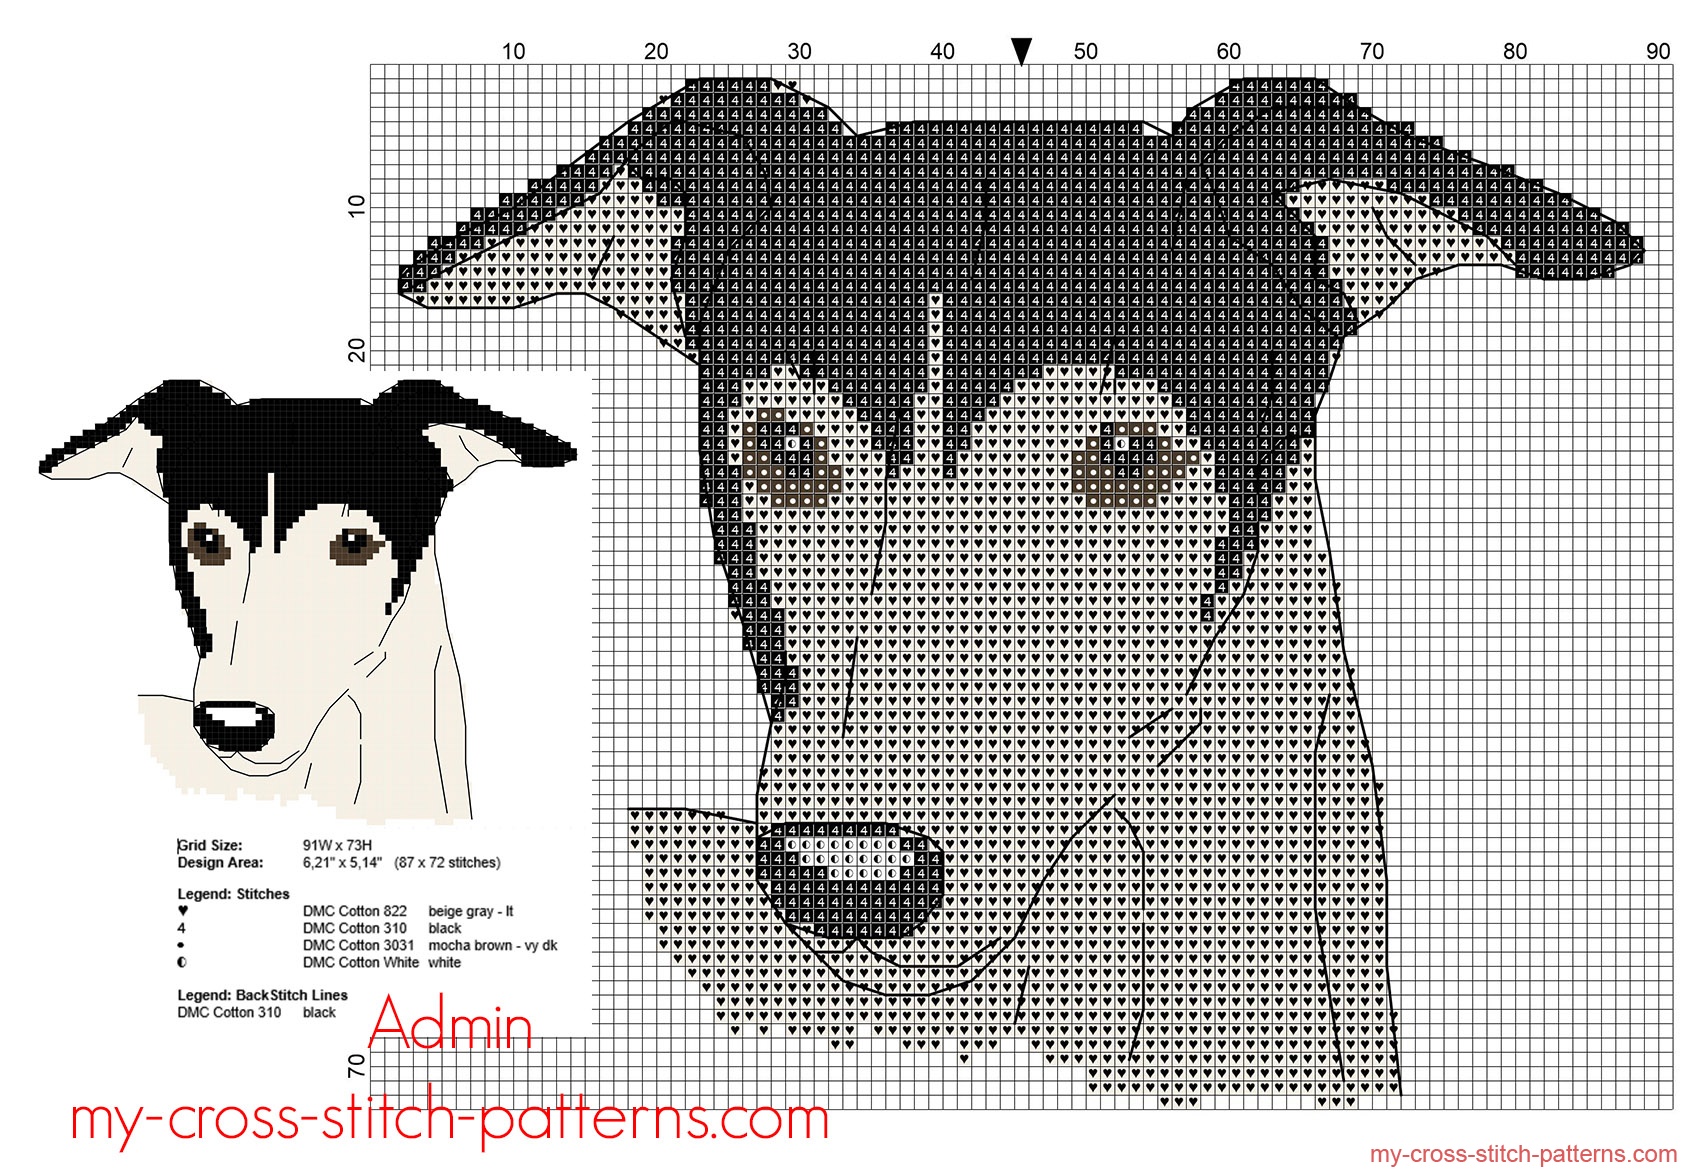 greyhound_dog_free_cross_stitch_pattern_87_x_72_stitches_4_dmc_threads_colors